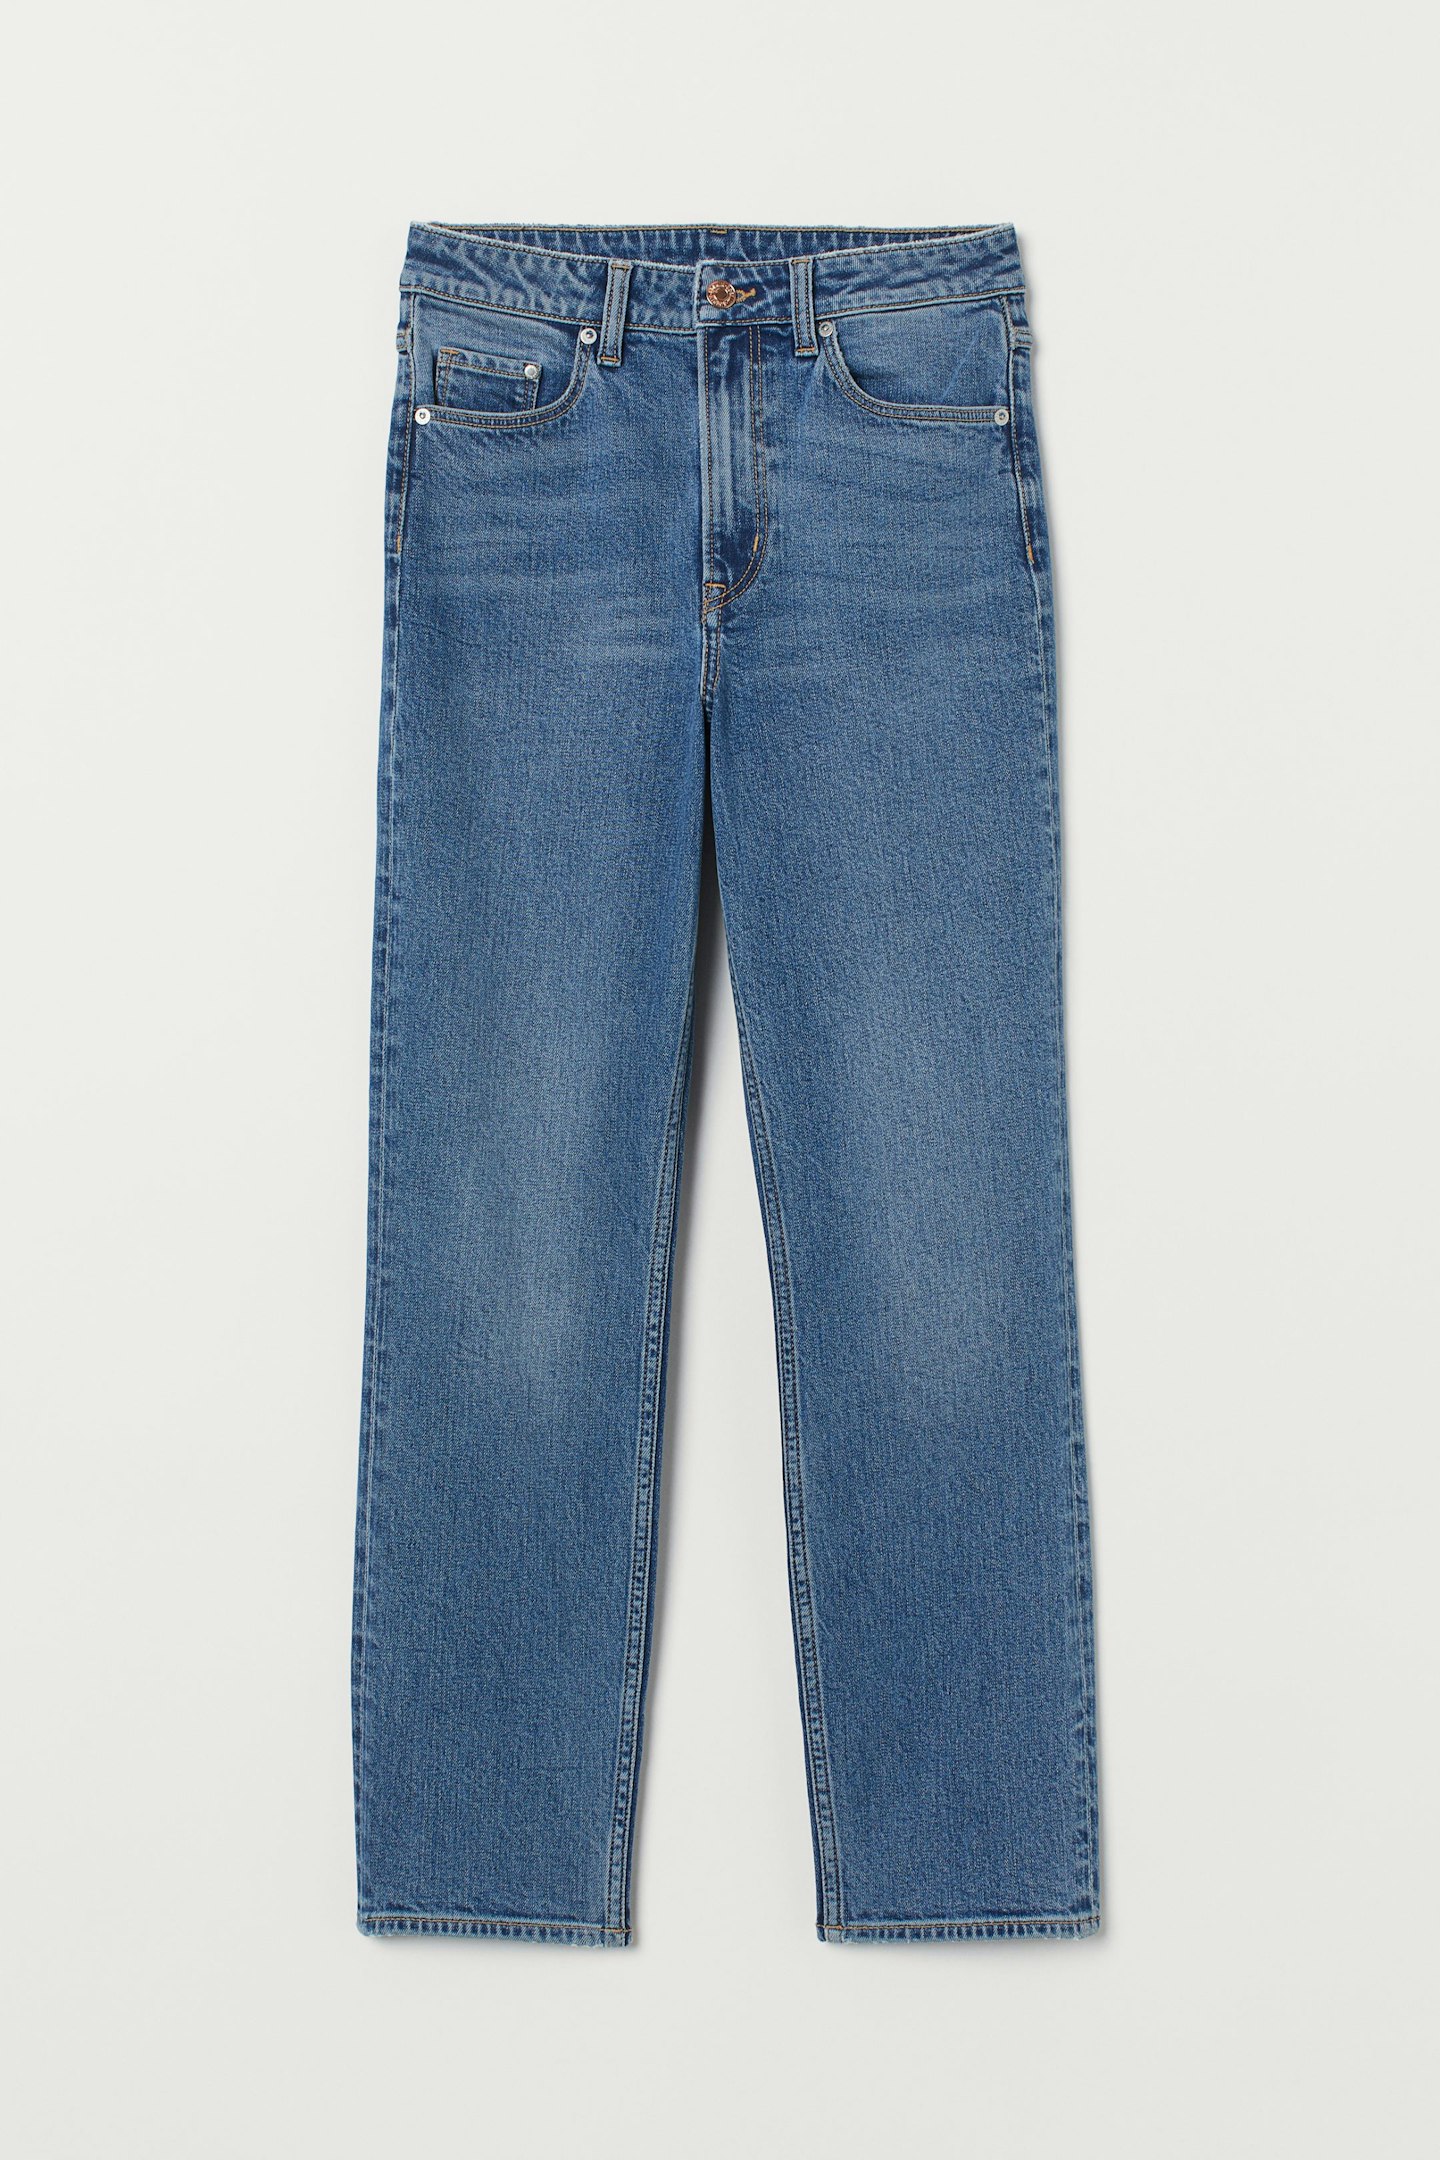 H&M, Vintage Slim High Ankle Jeans, £24.99